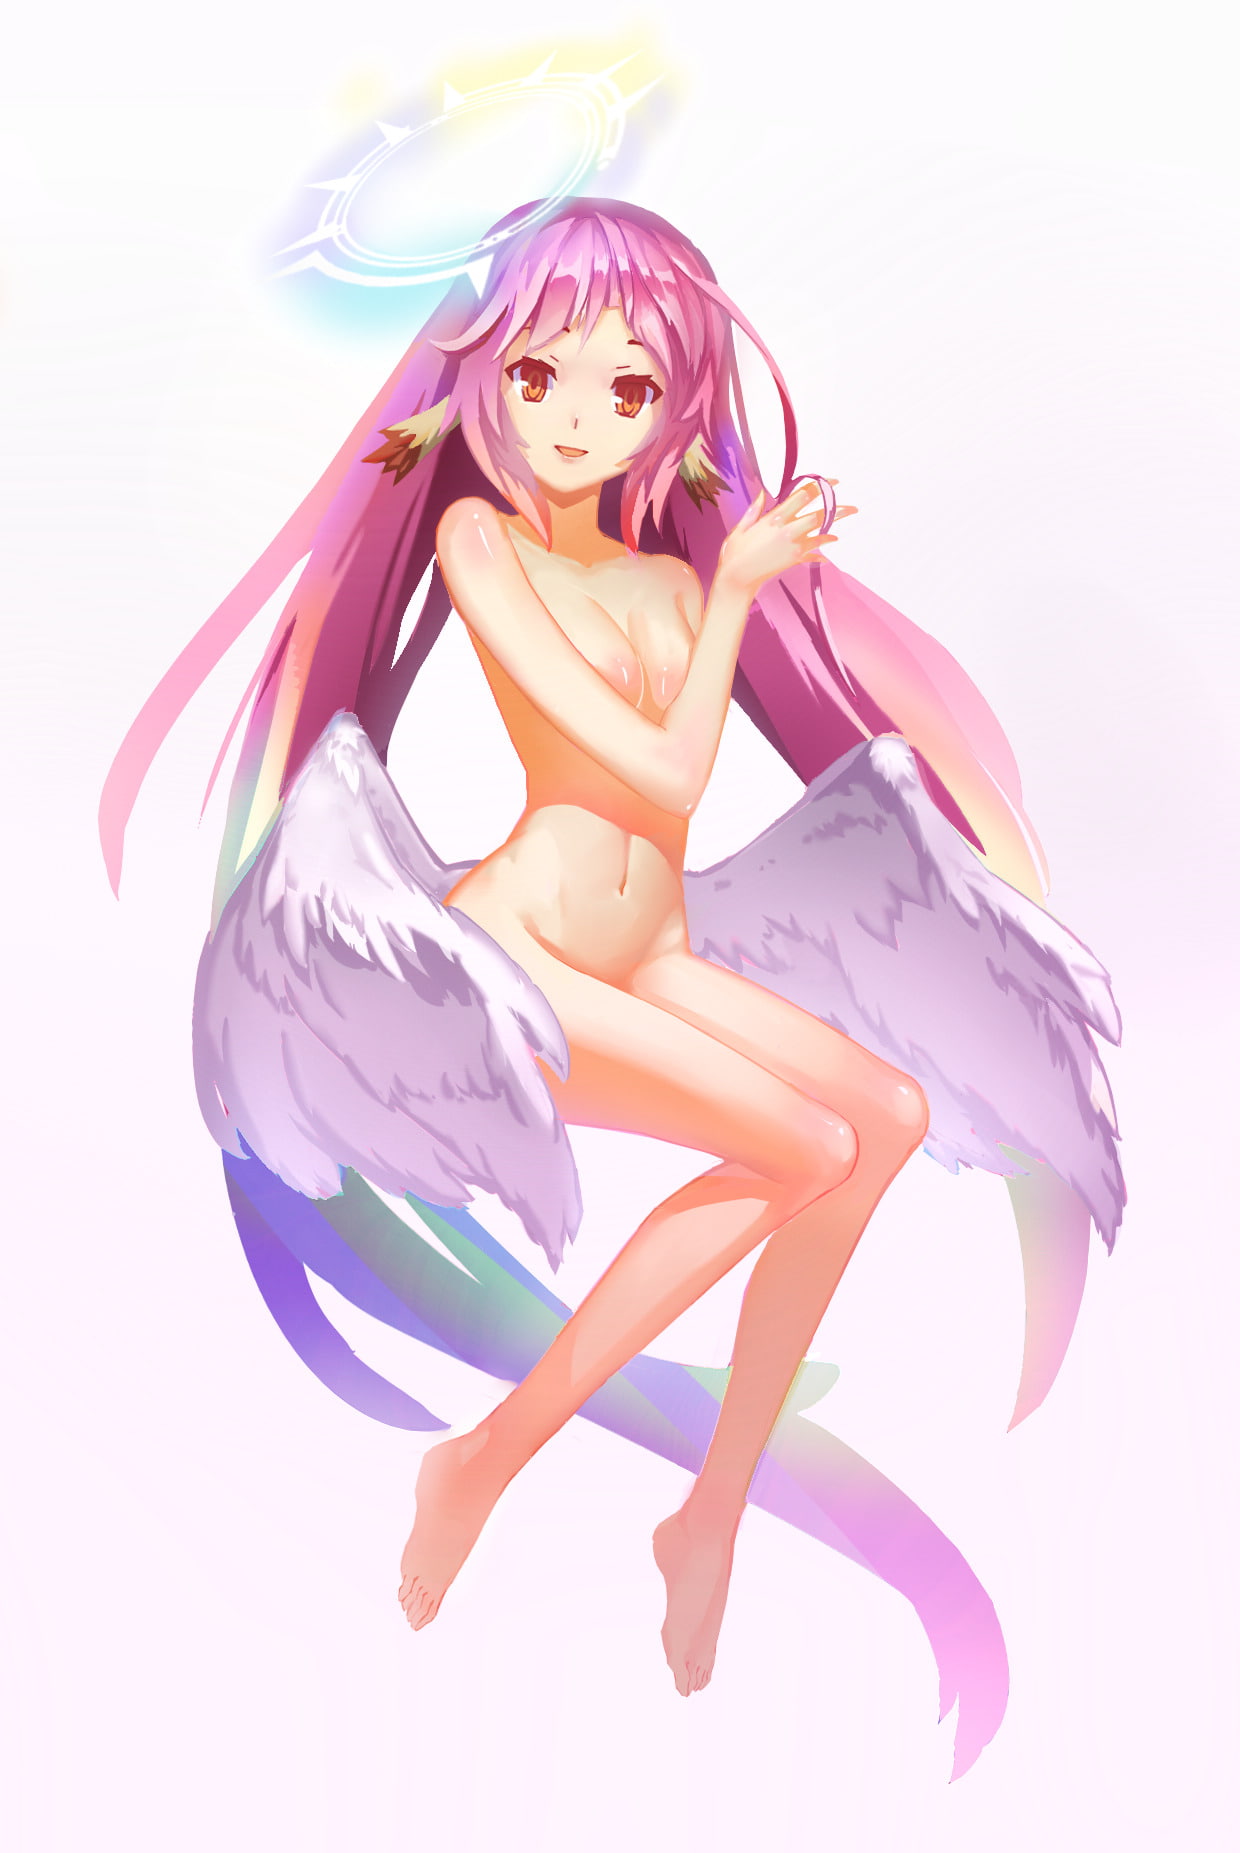 boobs pink hair nude sideboob wings jibril anime anime girls no game no life sexy anime